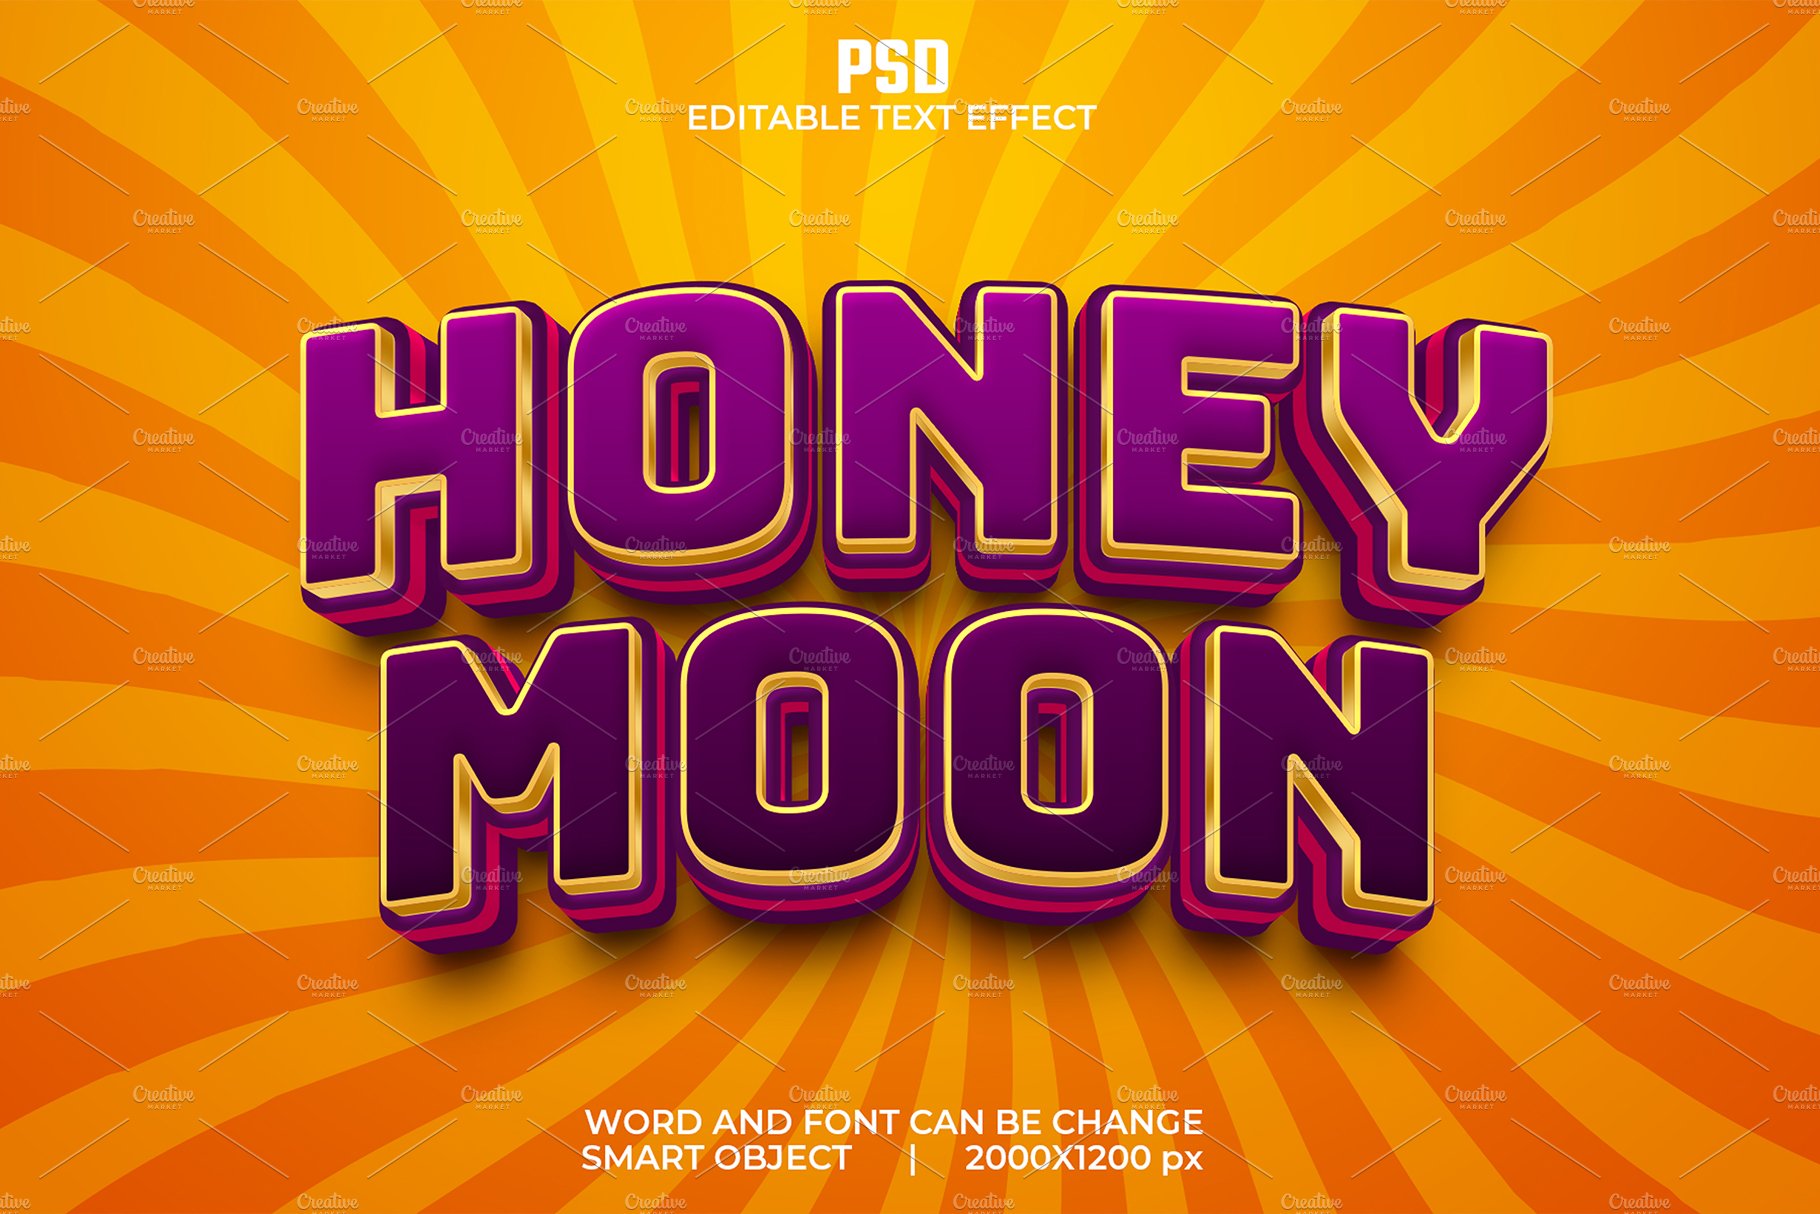 Honey moon 3d Psd Text Effectcover image.